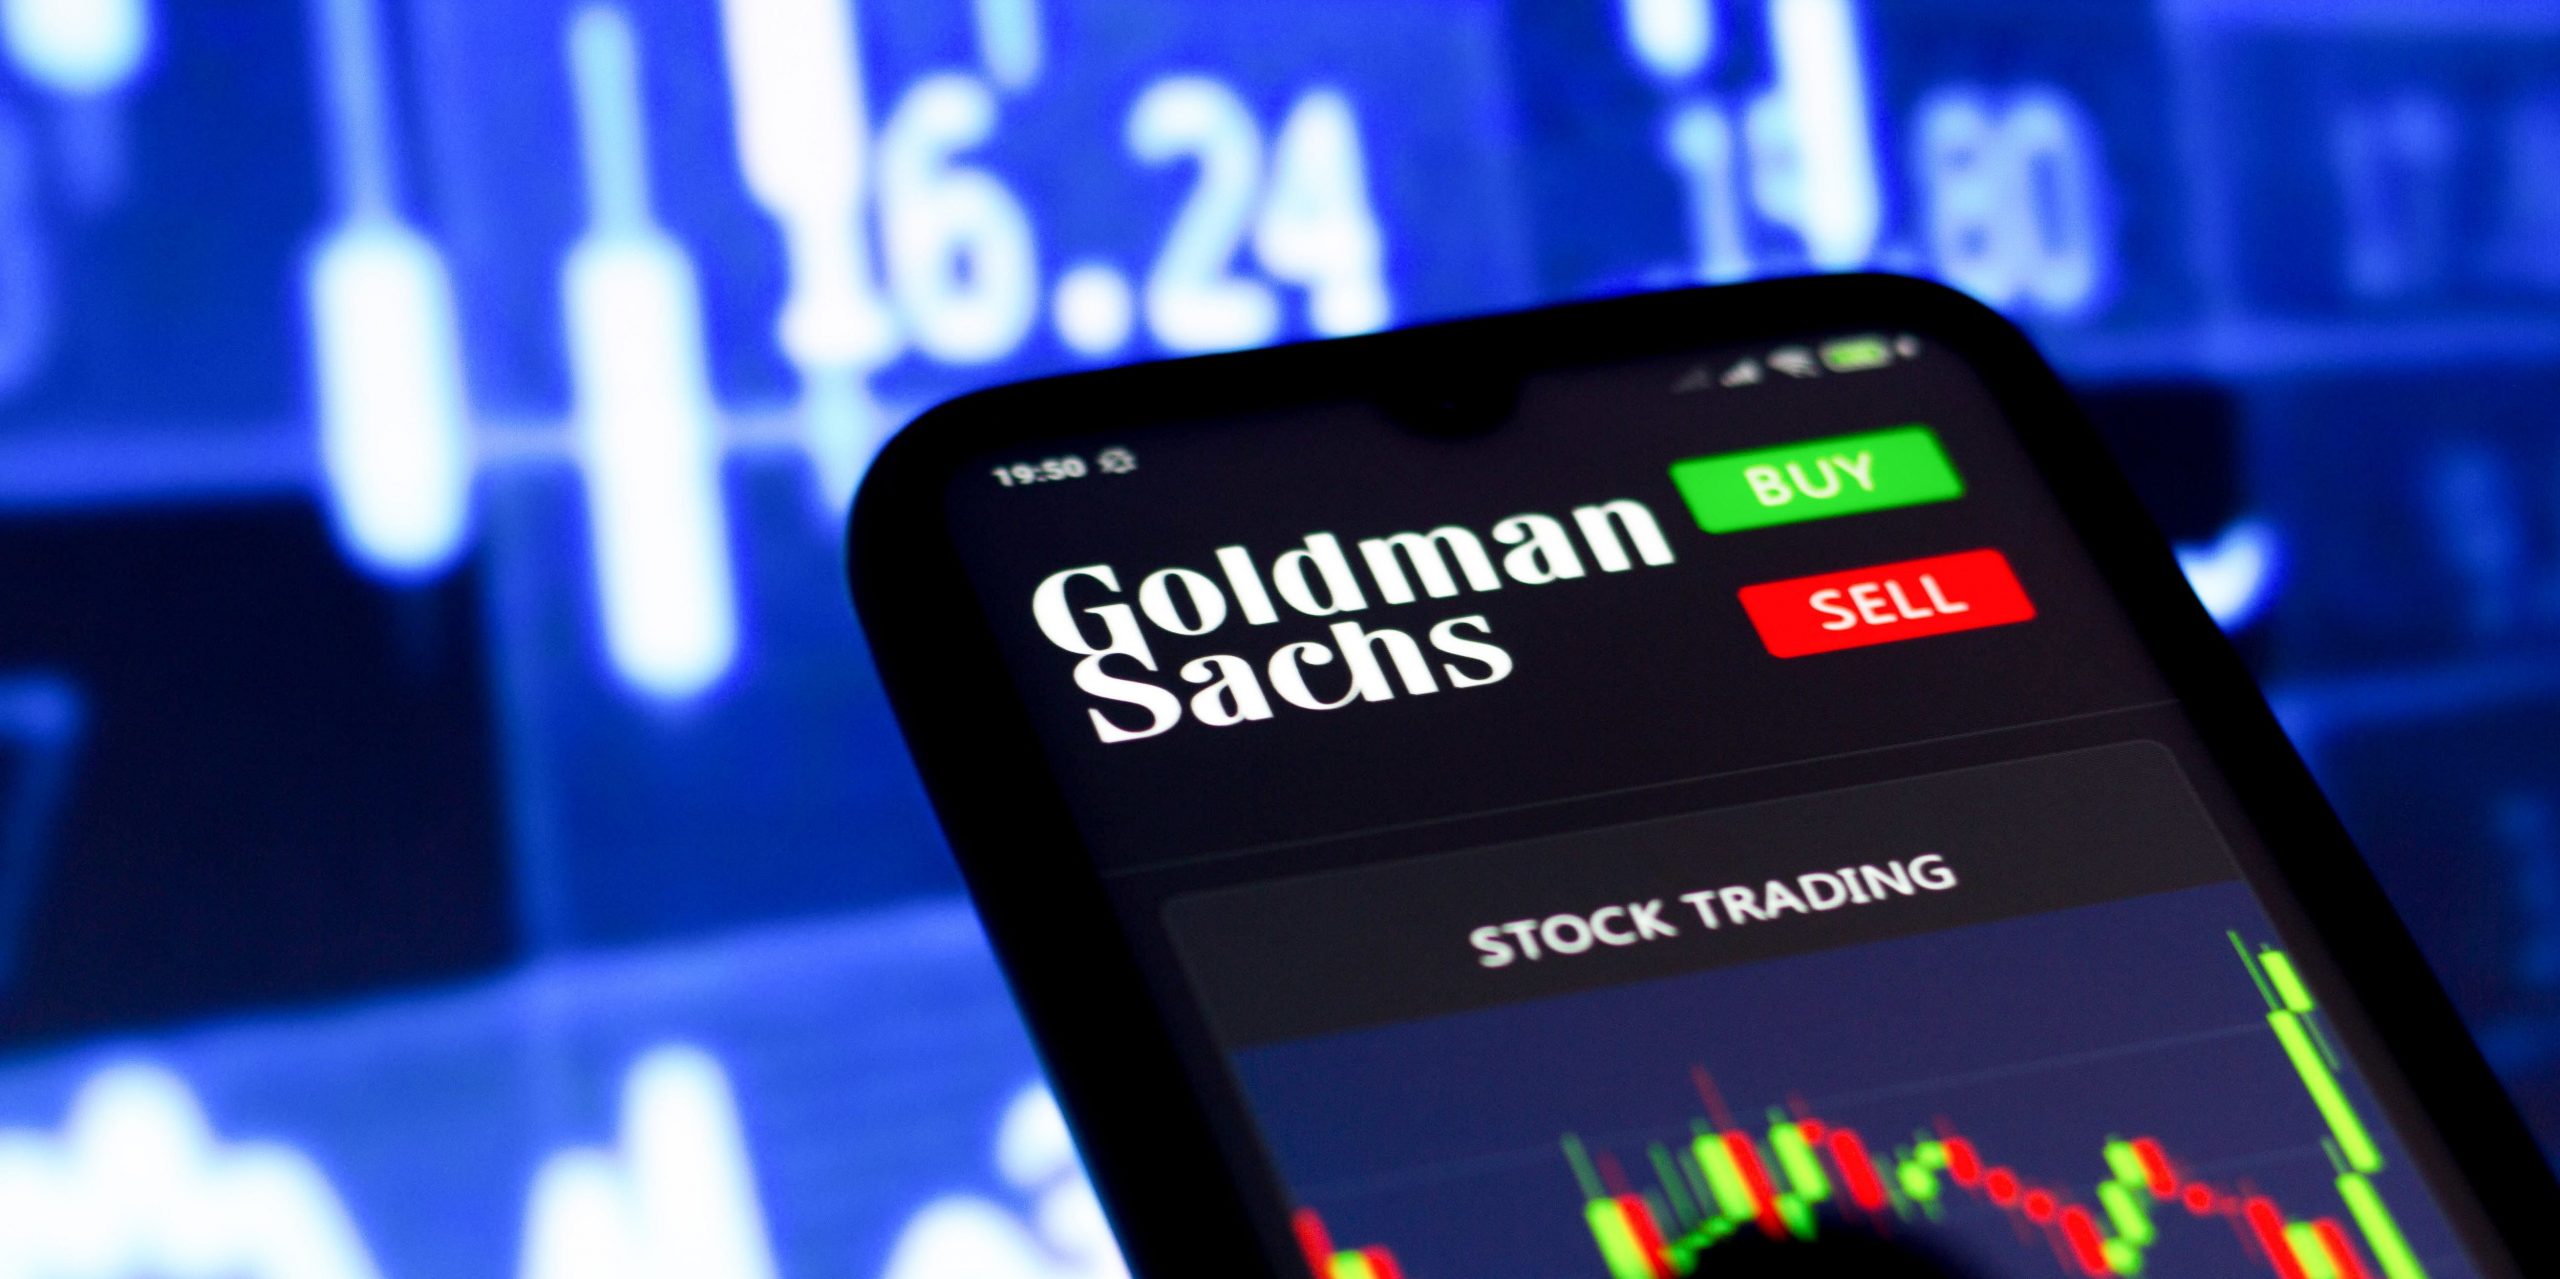 Goldman Sachs app